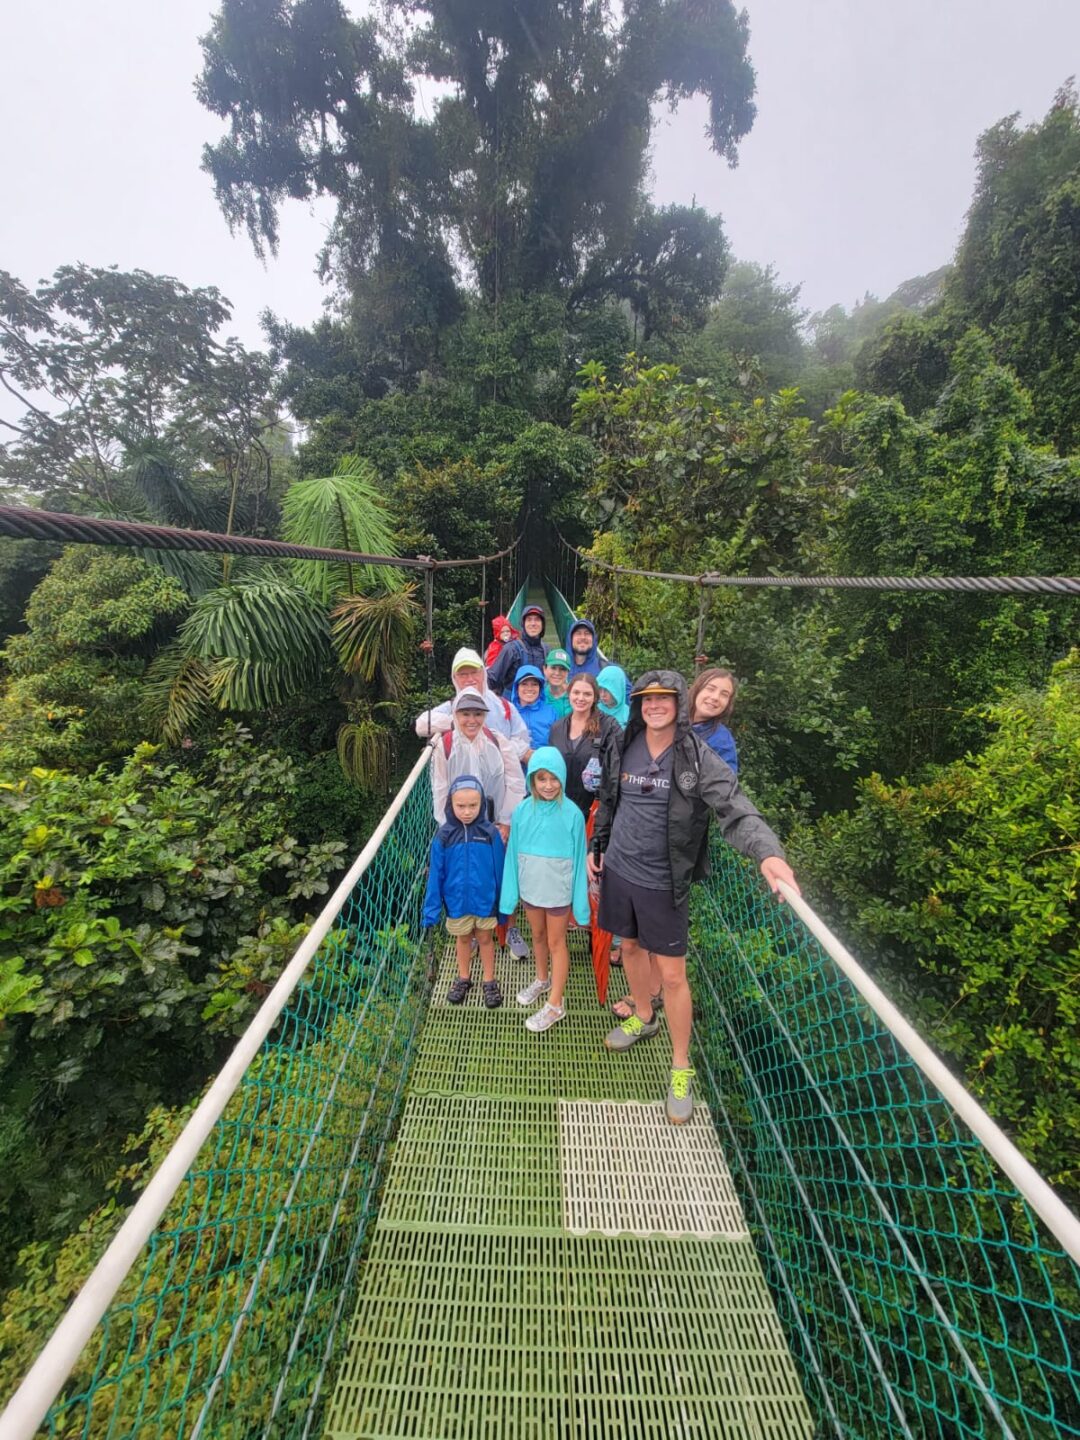 Costa Rica: Finding Pura Vida on a Family Vacation